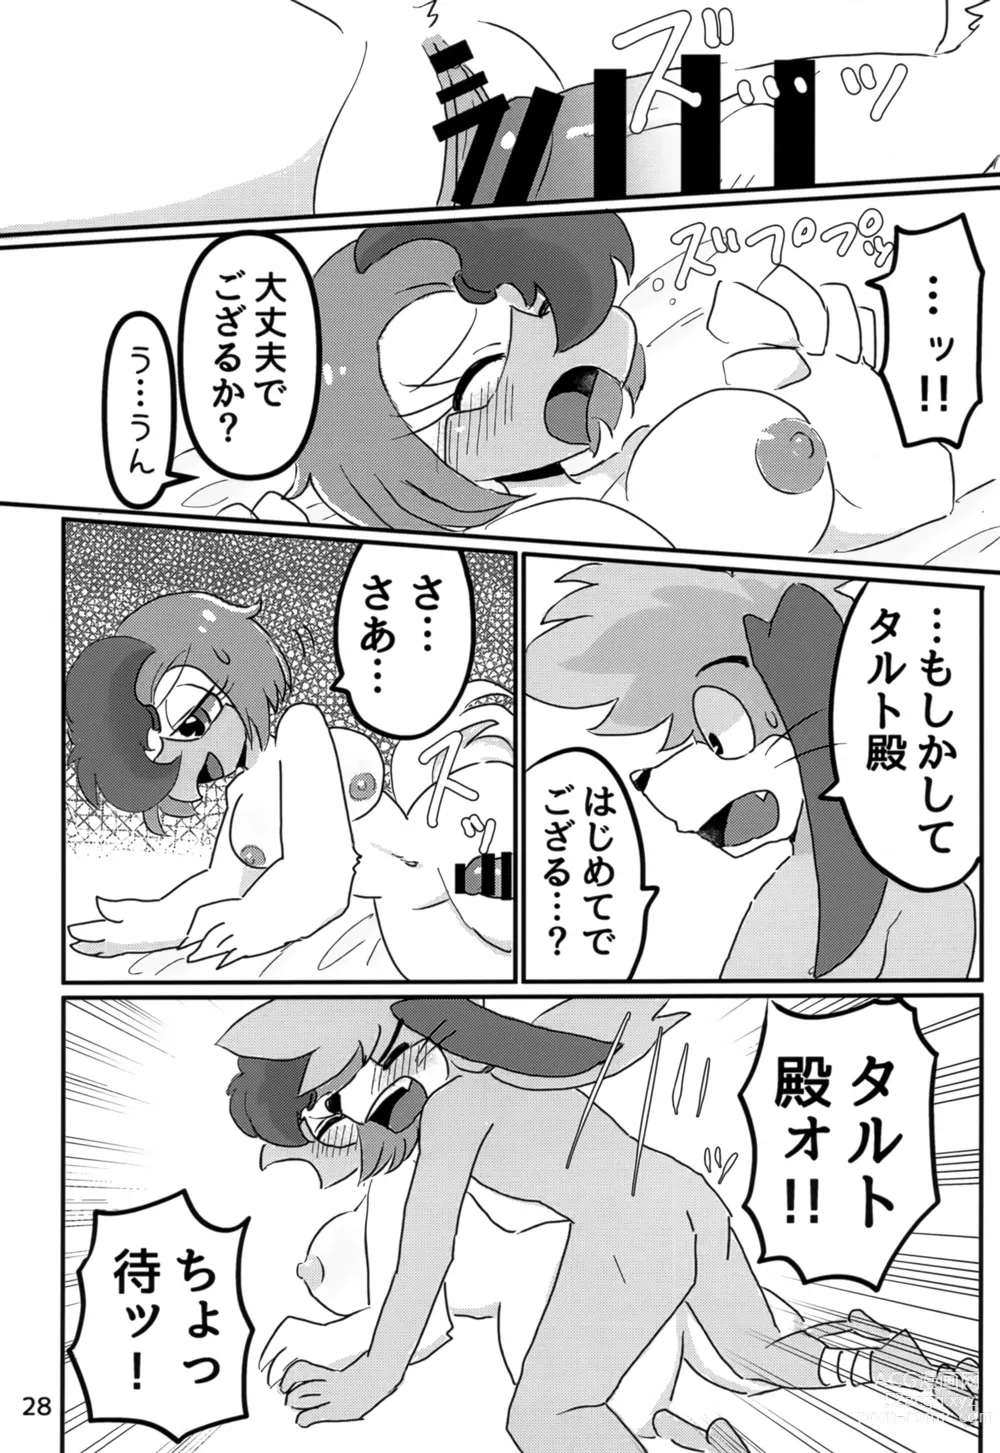 Page 27 of doujinshi Juunishi Lovers